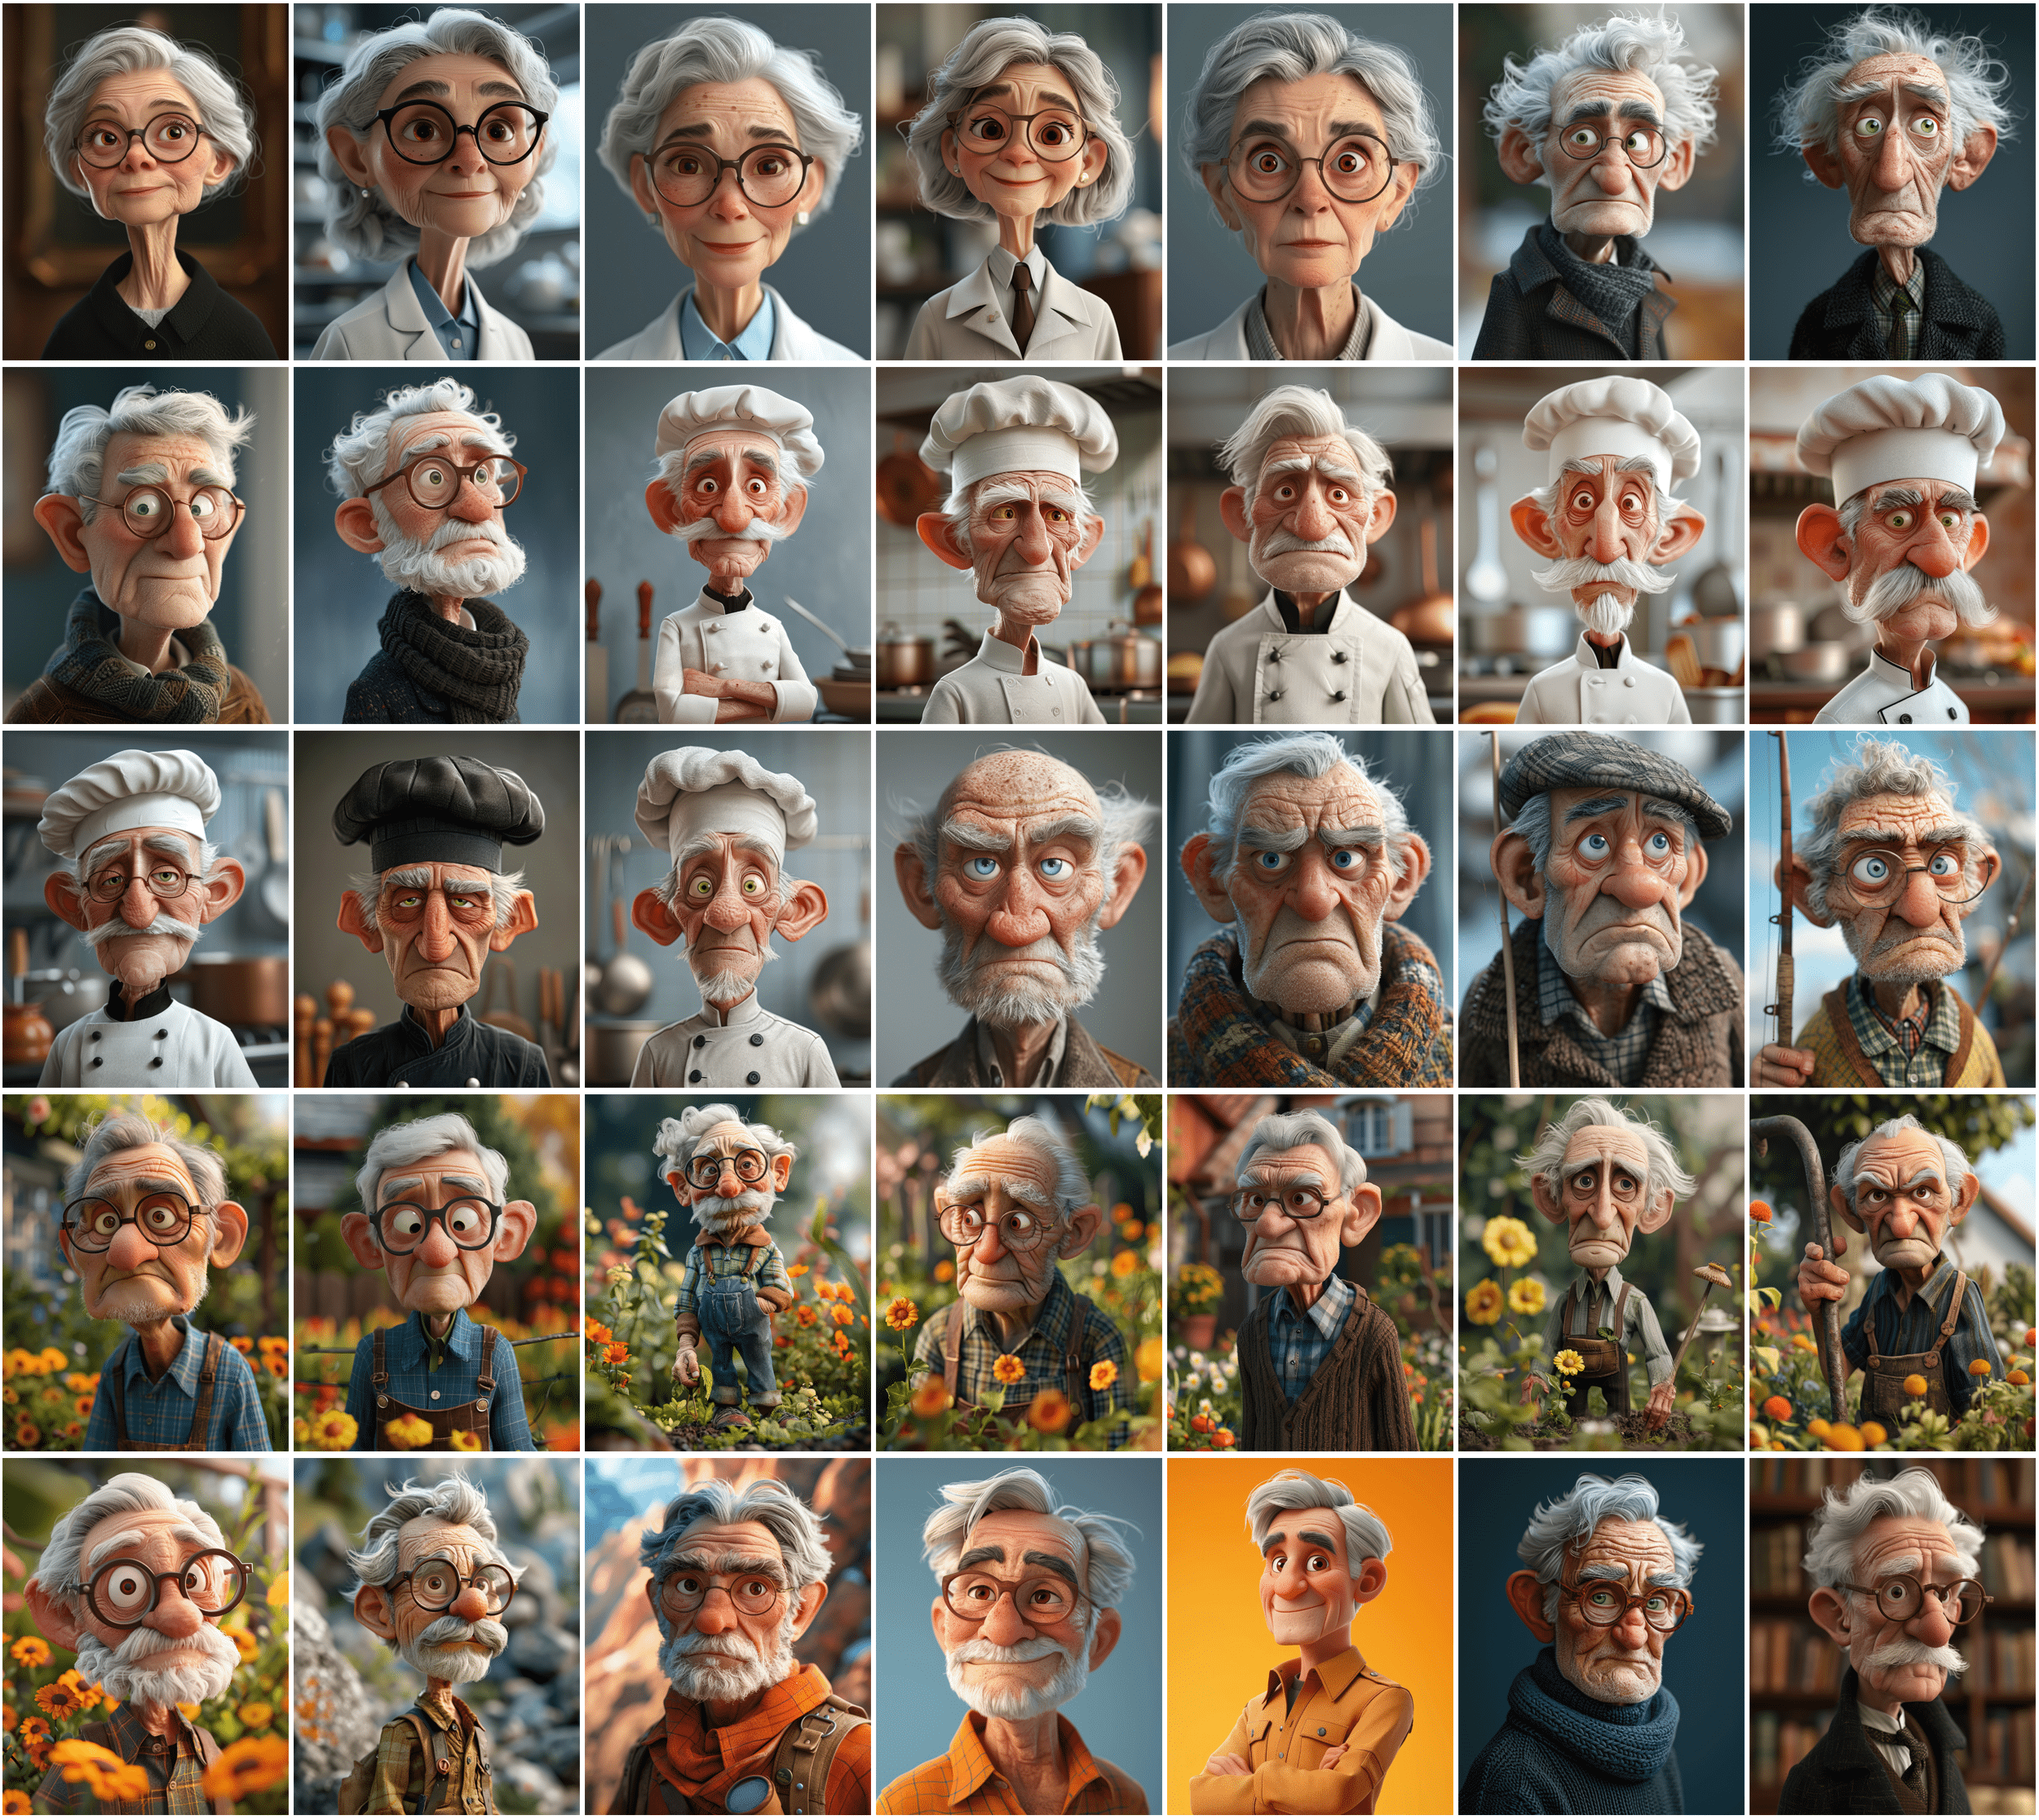 390 Unique 3D Character Images - Diverse Professions - High-Resolution Digital Art with Commercial License Digital Download Sumobundle